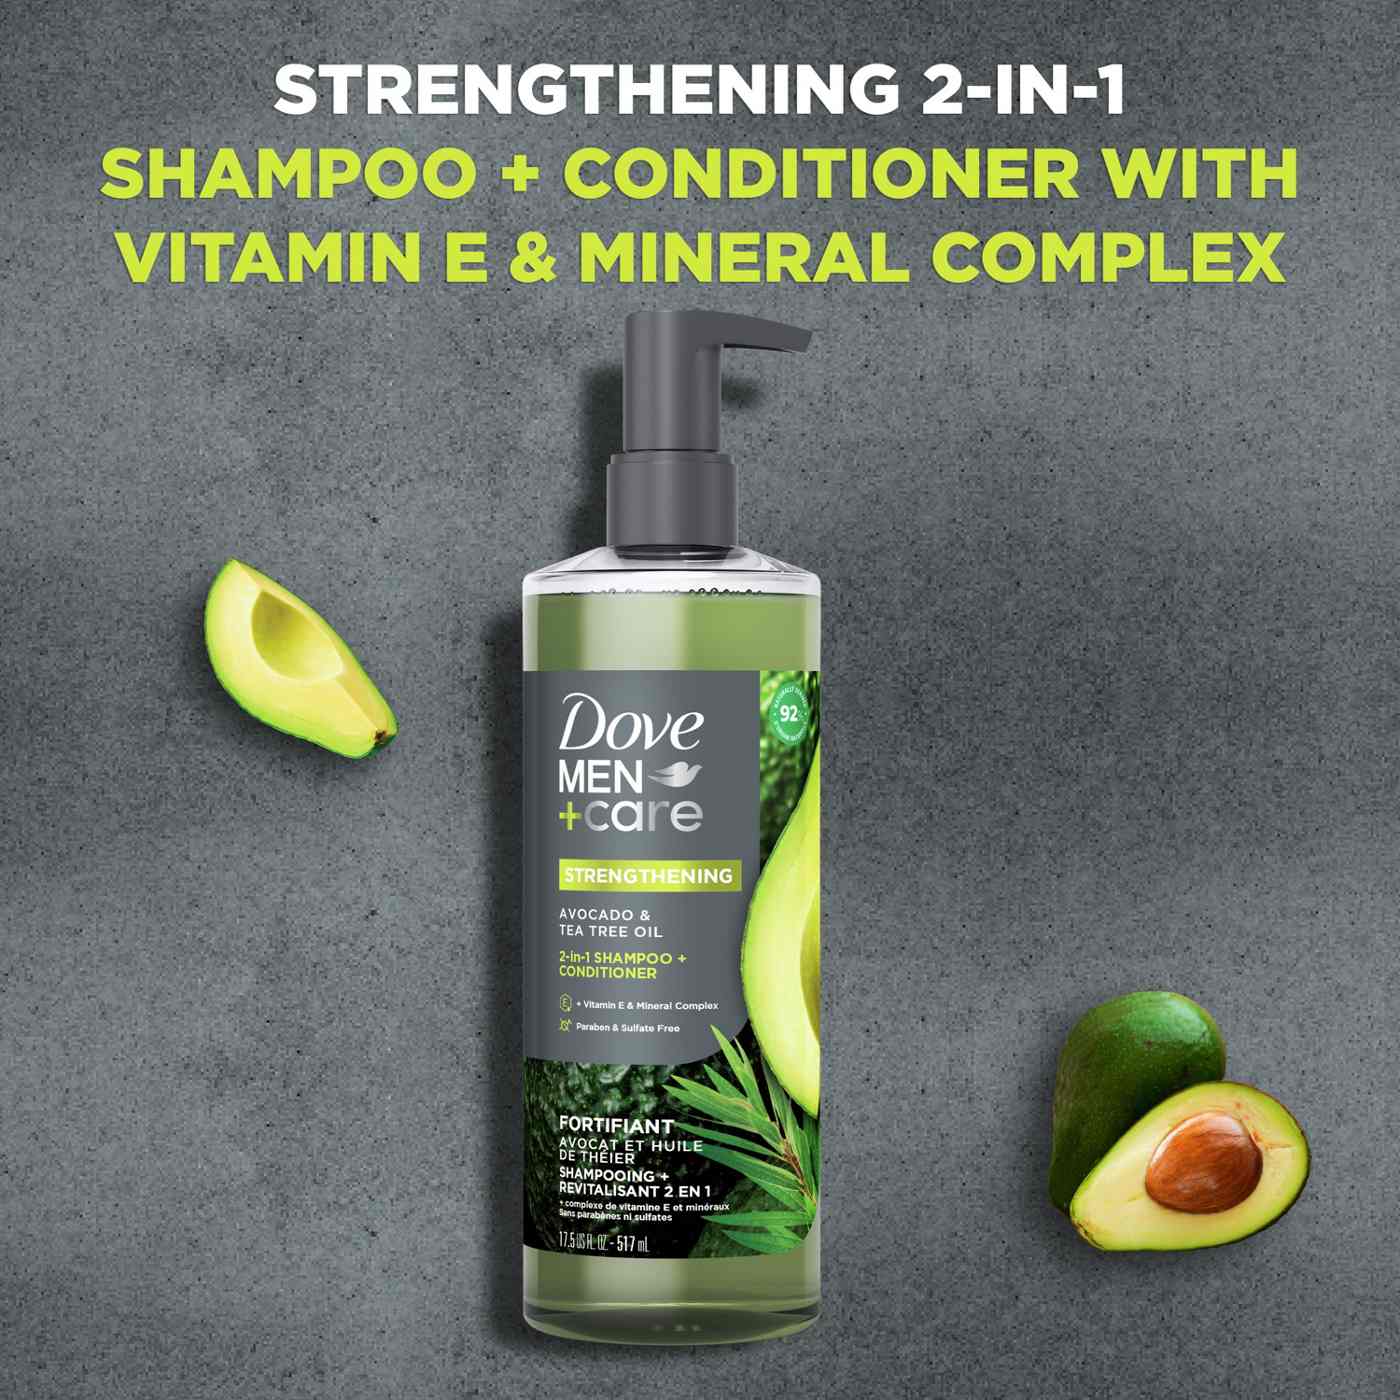 Dove Men+Care Strengthening 2 in 1 Shampoo + Conditioner - Avocado & Tea Tree Oil; image 3 of 5